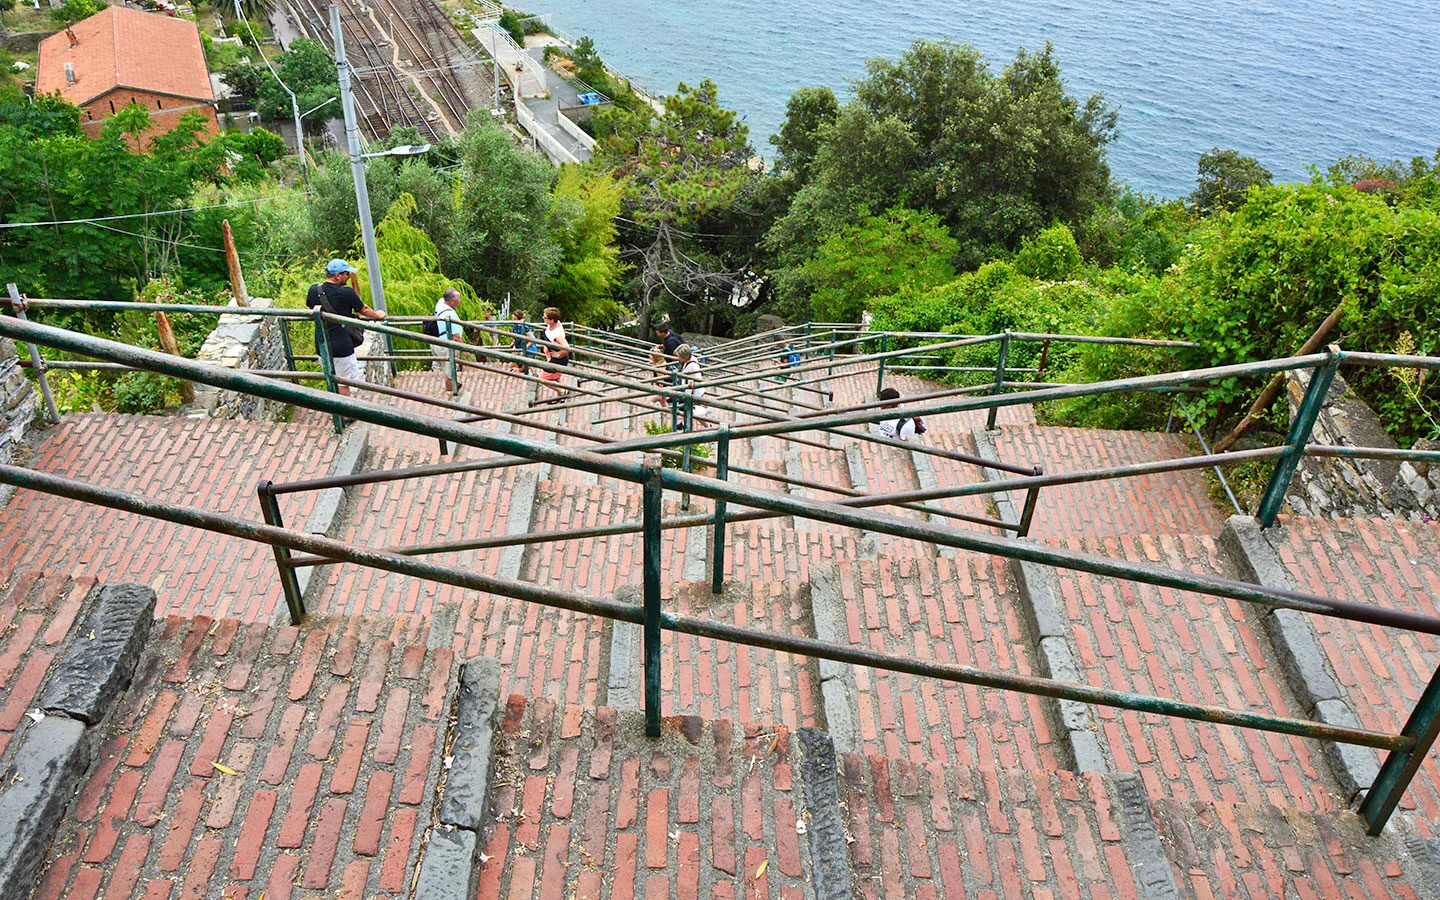 The Lardarina staircase from Corniglia station to the village